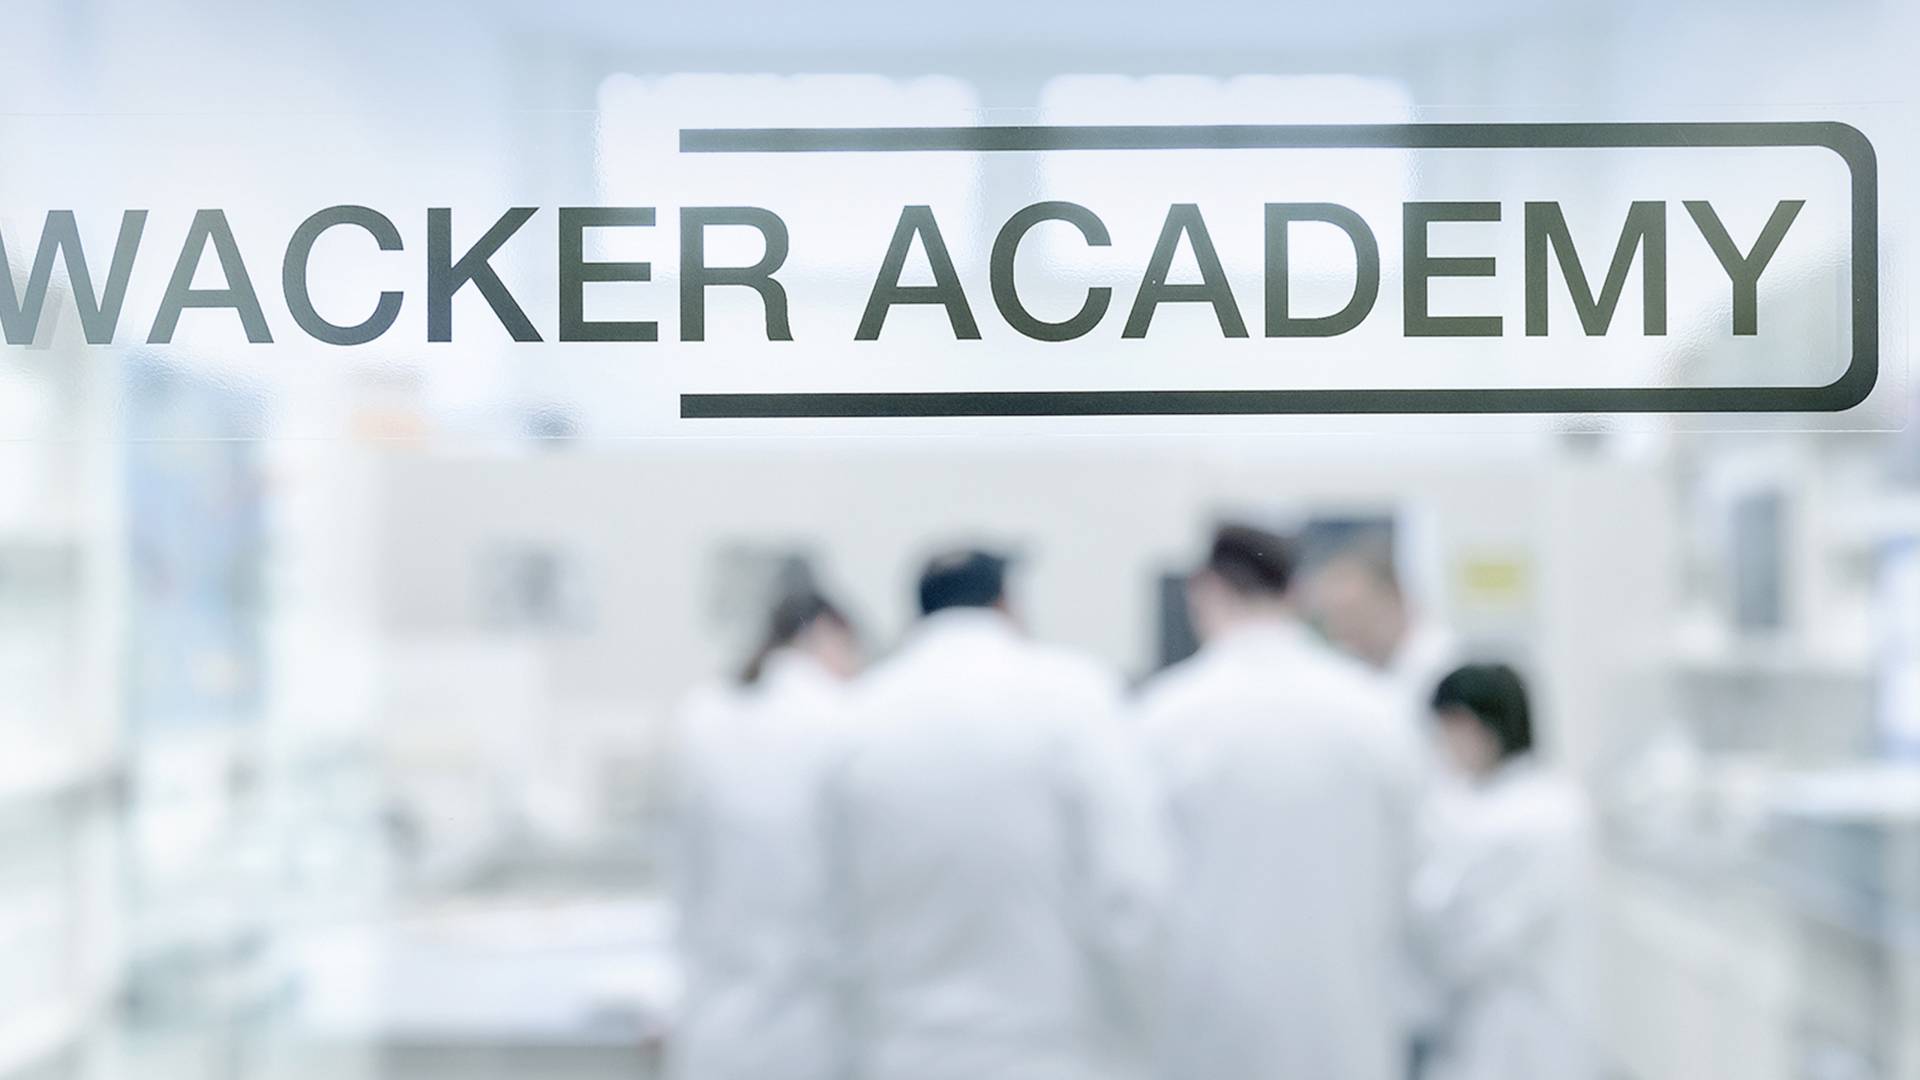 WACKER ACADEMY laboratory